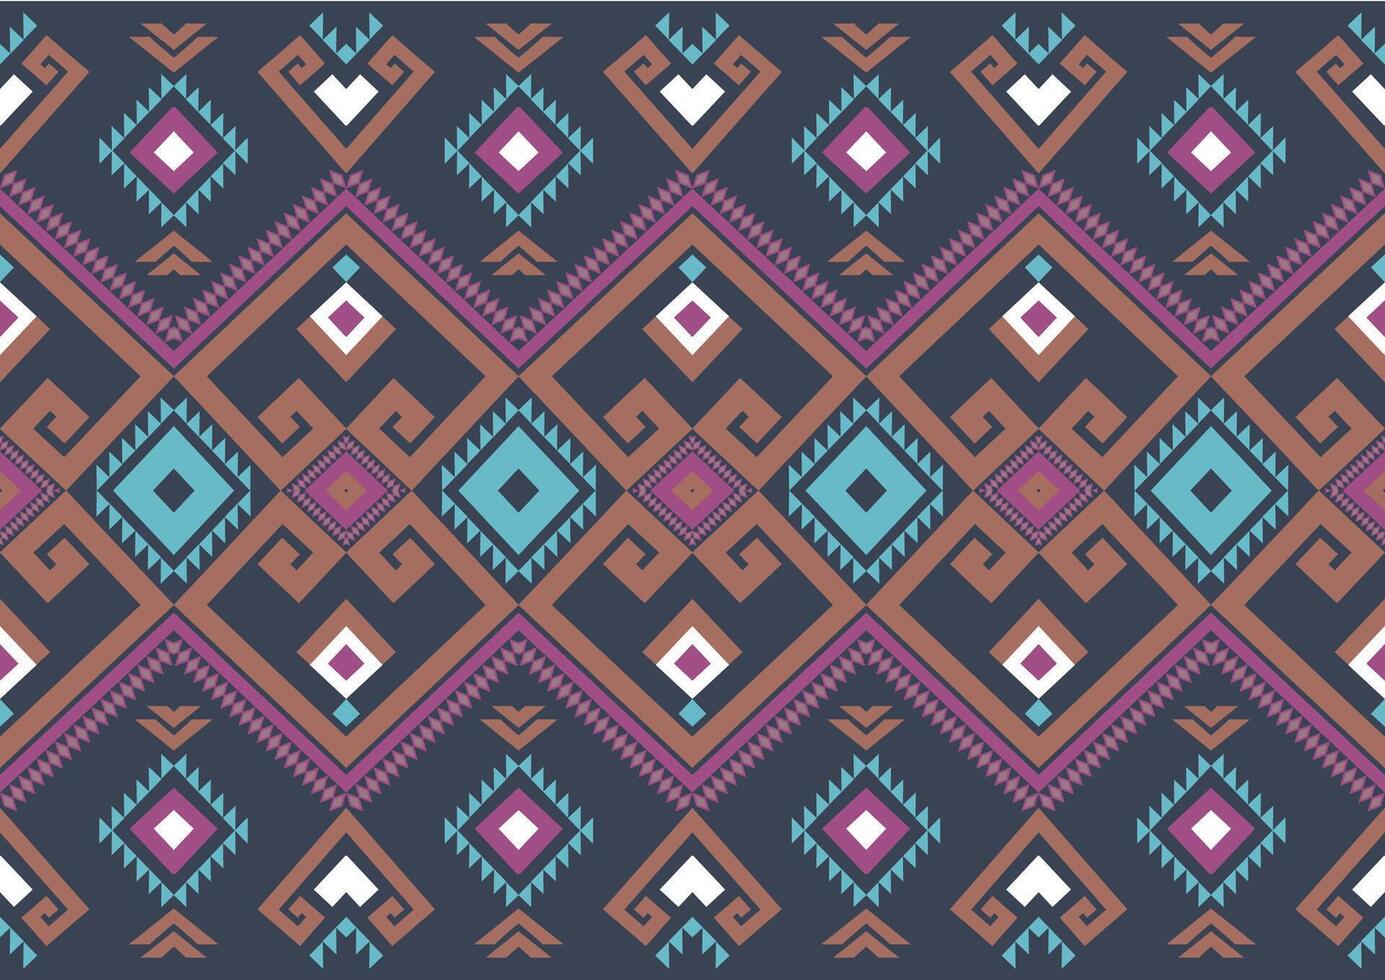 sömlös blandad färgrik etnisk stam- geometrisk motiv mönster textil- på indigo bakgrund. abstrakt Flerfärgad inföding afrikansk ,batik tyg textur design för Kläder broderi- vektor